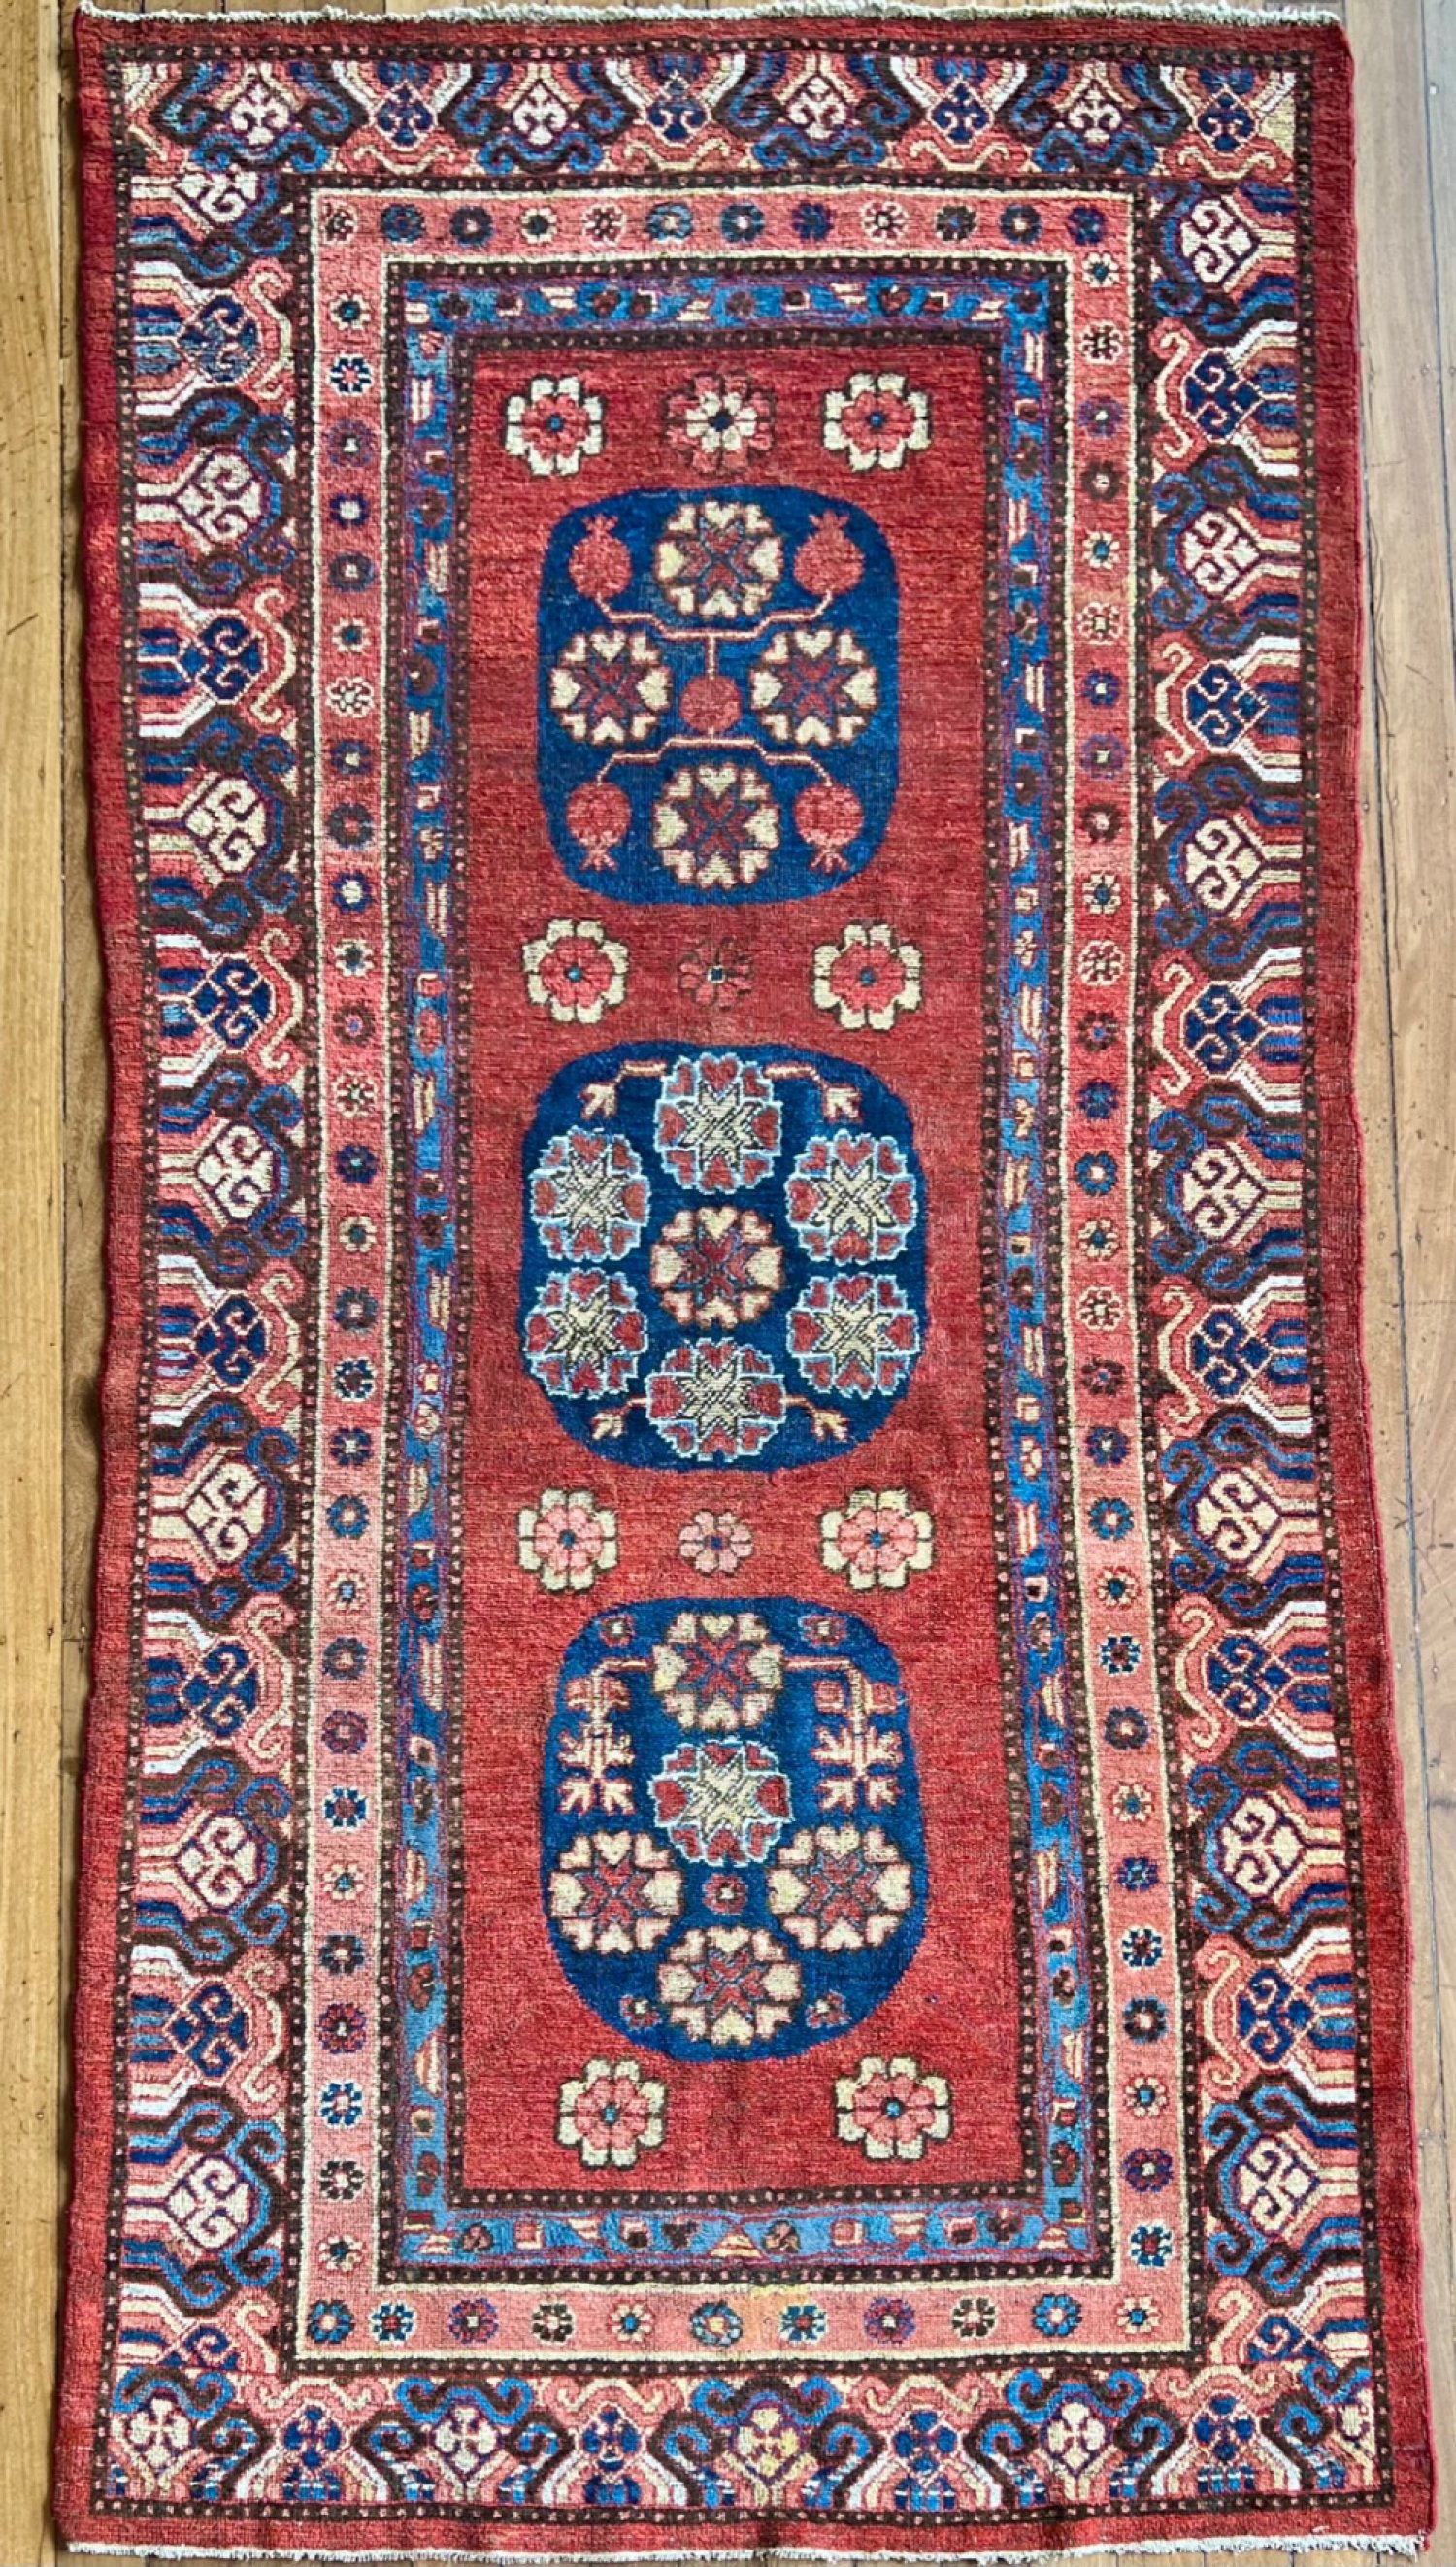 Khotan rug from east Turkestan / Xinjiang province, western China